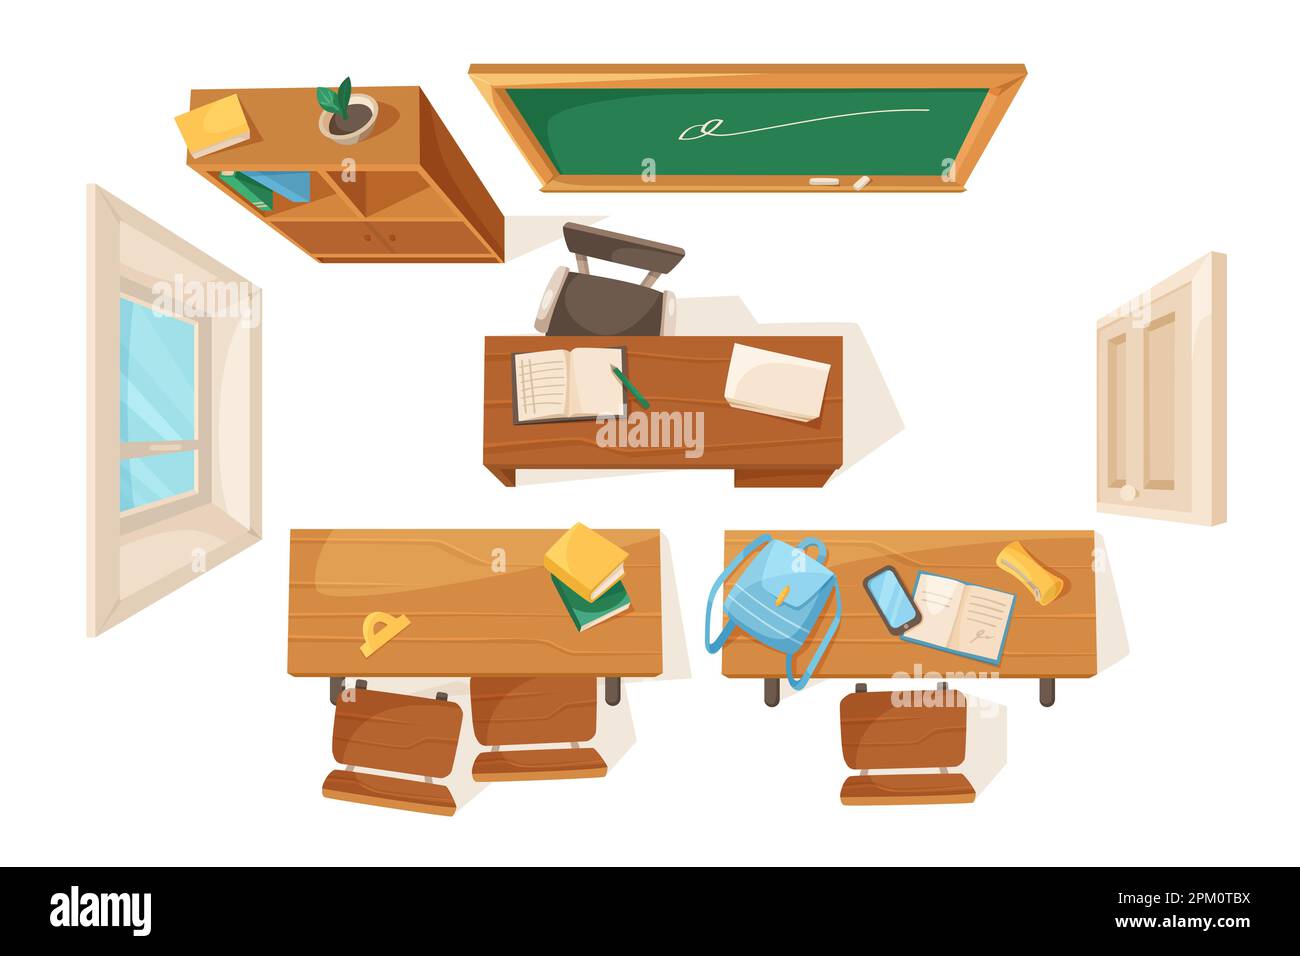 Top view of classroom interior elements vector illustrations set Stock Vector